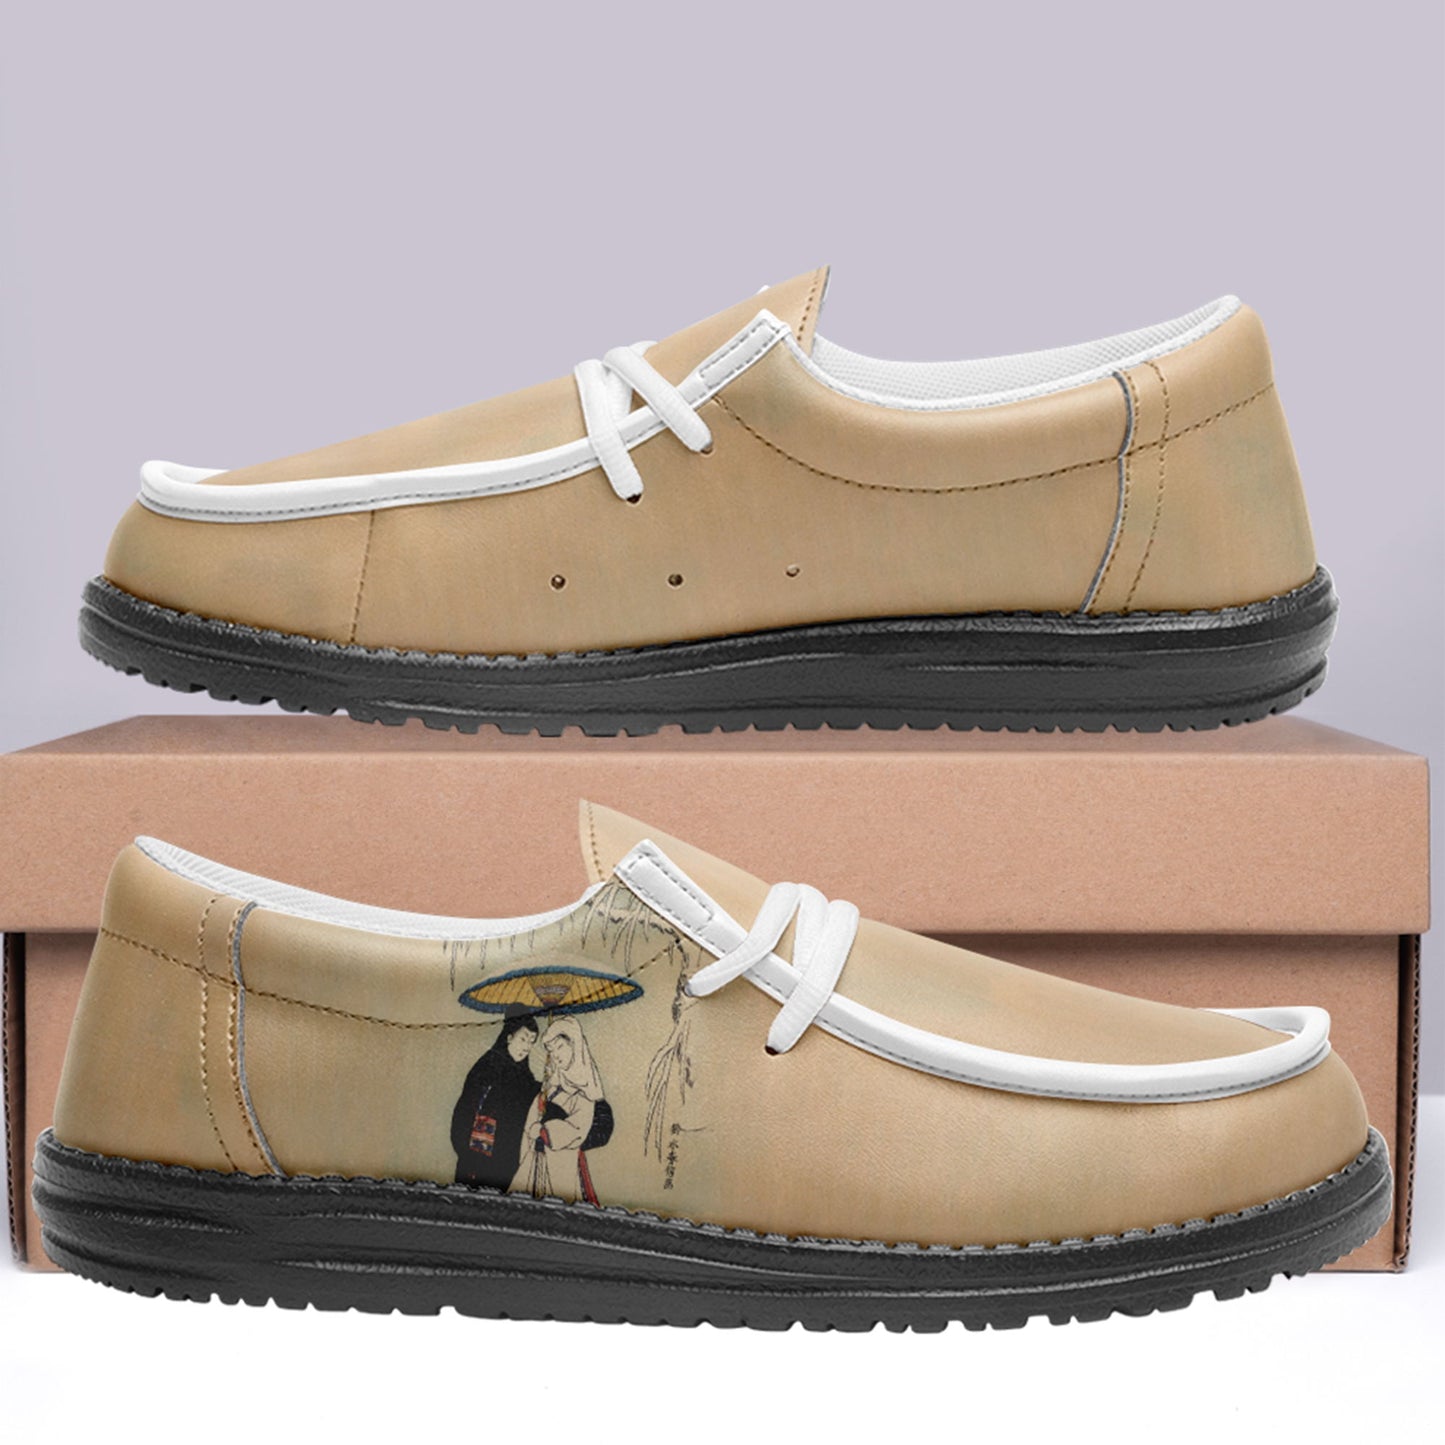 customize printed yo bro shoes ukiyo-e suzuki harunobu's couple under umbrella in snow casual shoes white shoelace 6